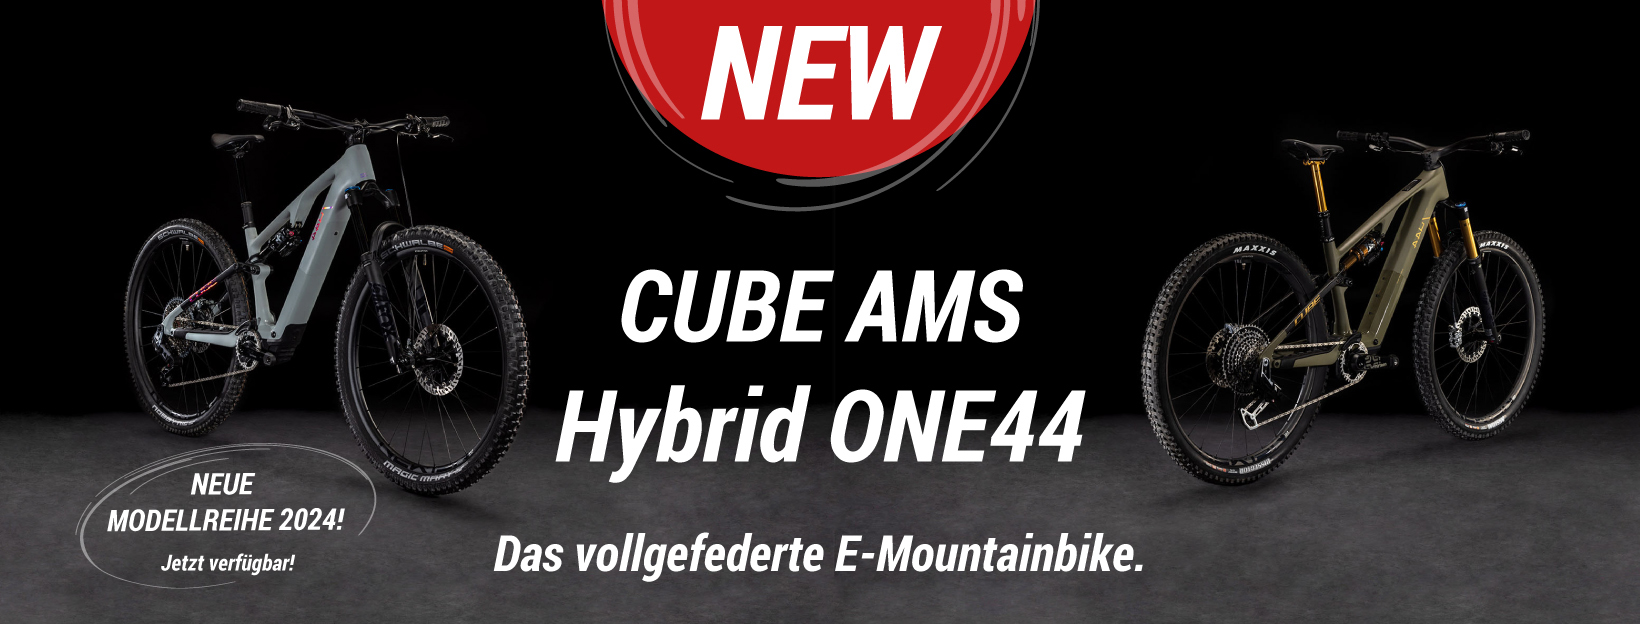 CUBE AMS Hybrid ONE44 im BIKE Market bestellen